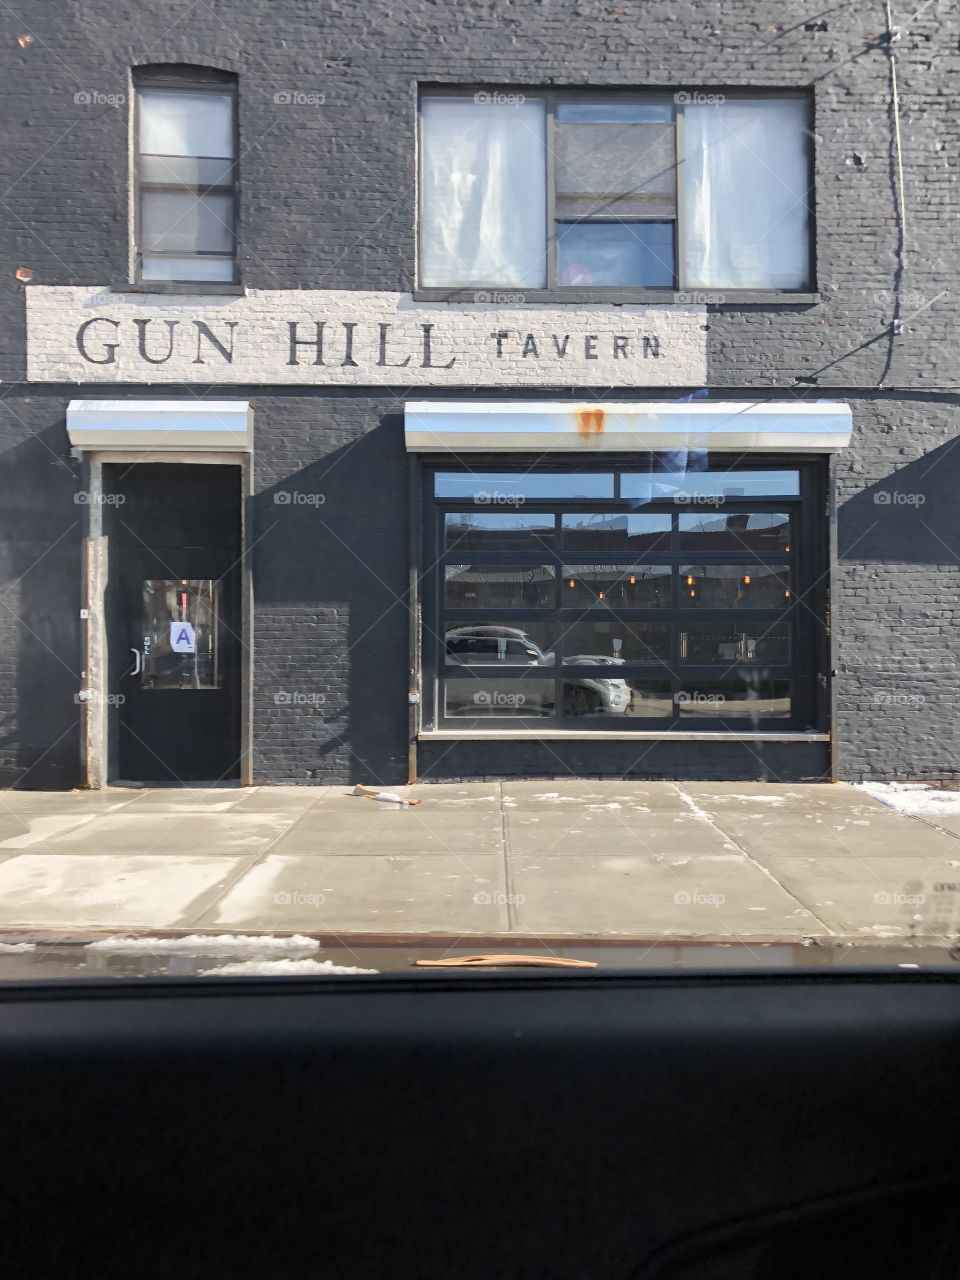 Gun Hill tavern